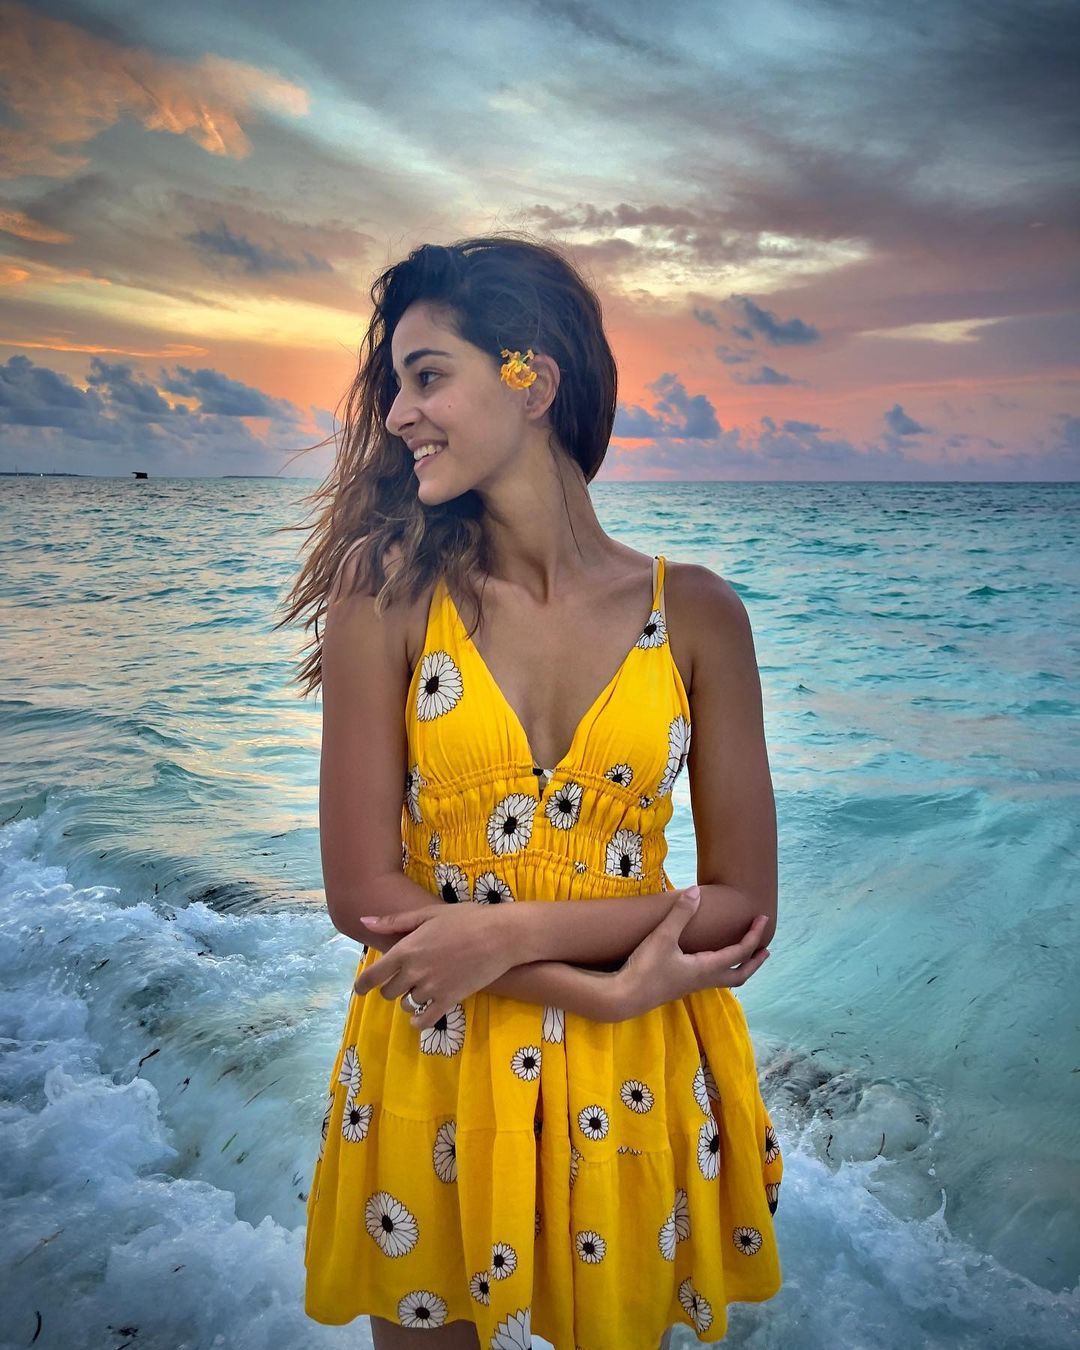 Ananya Panday looks stunning in the bright yellow dress